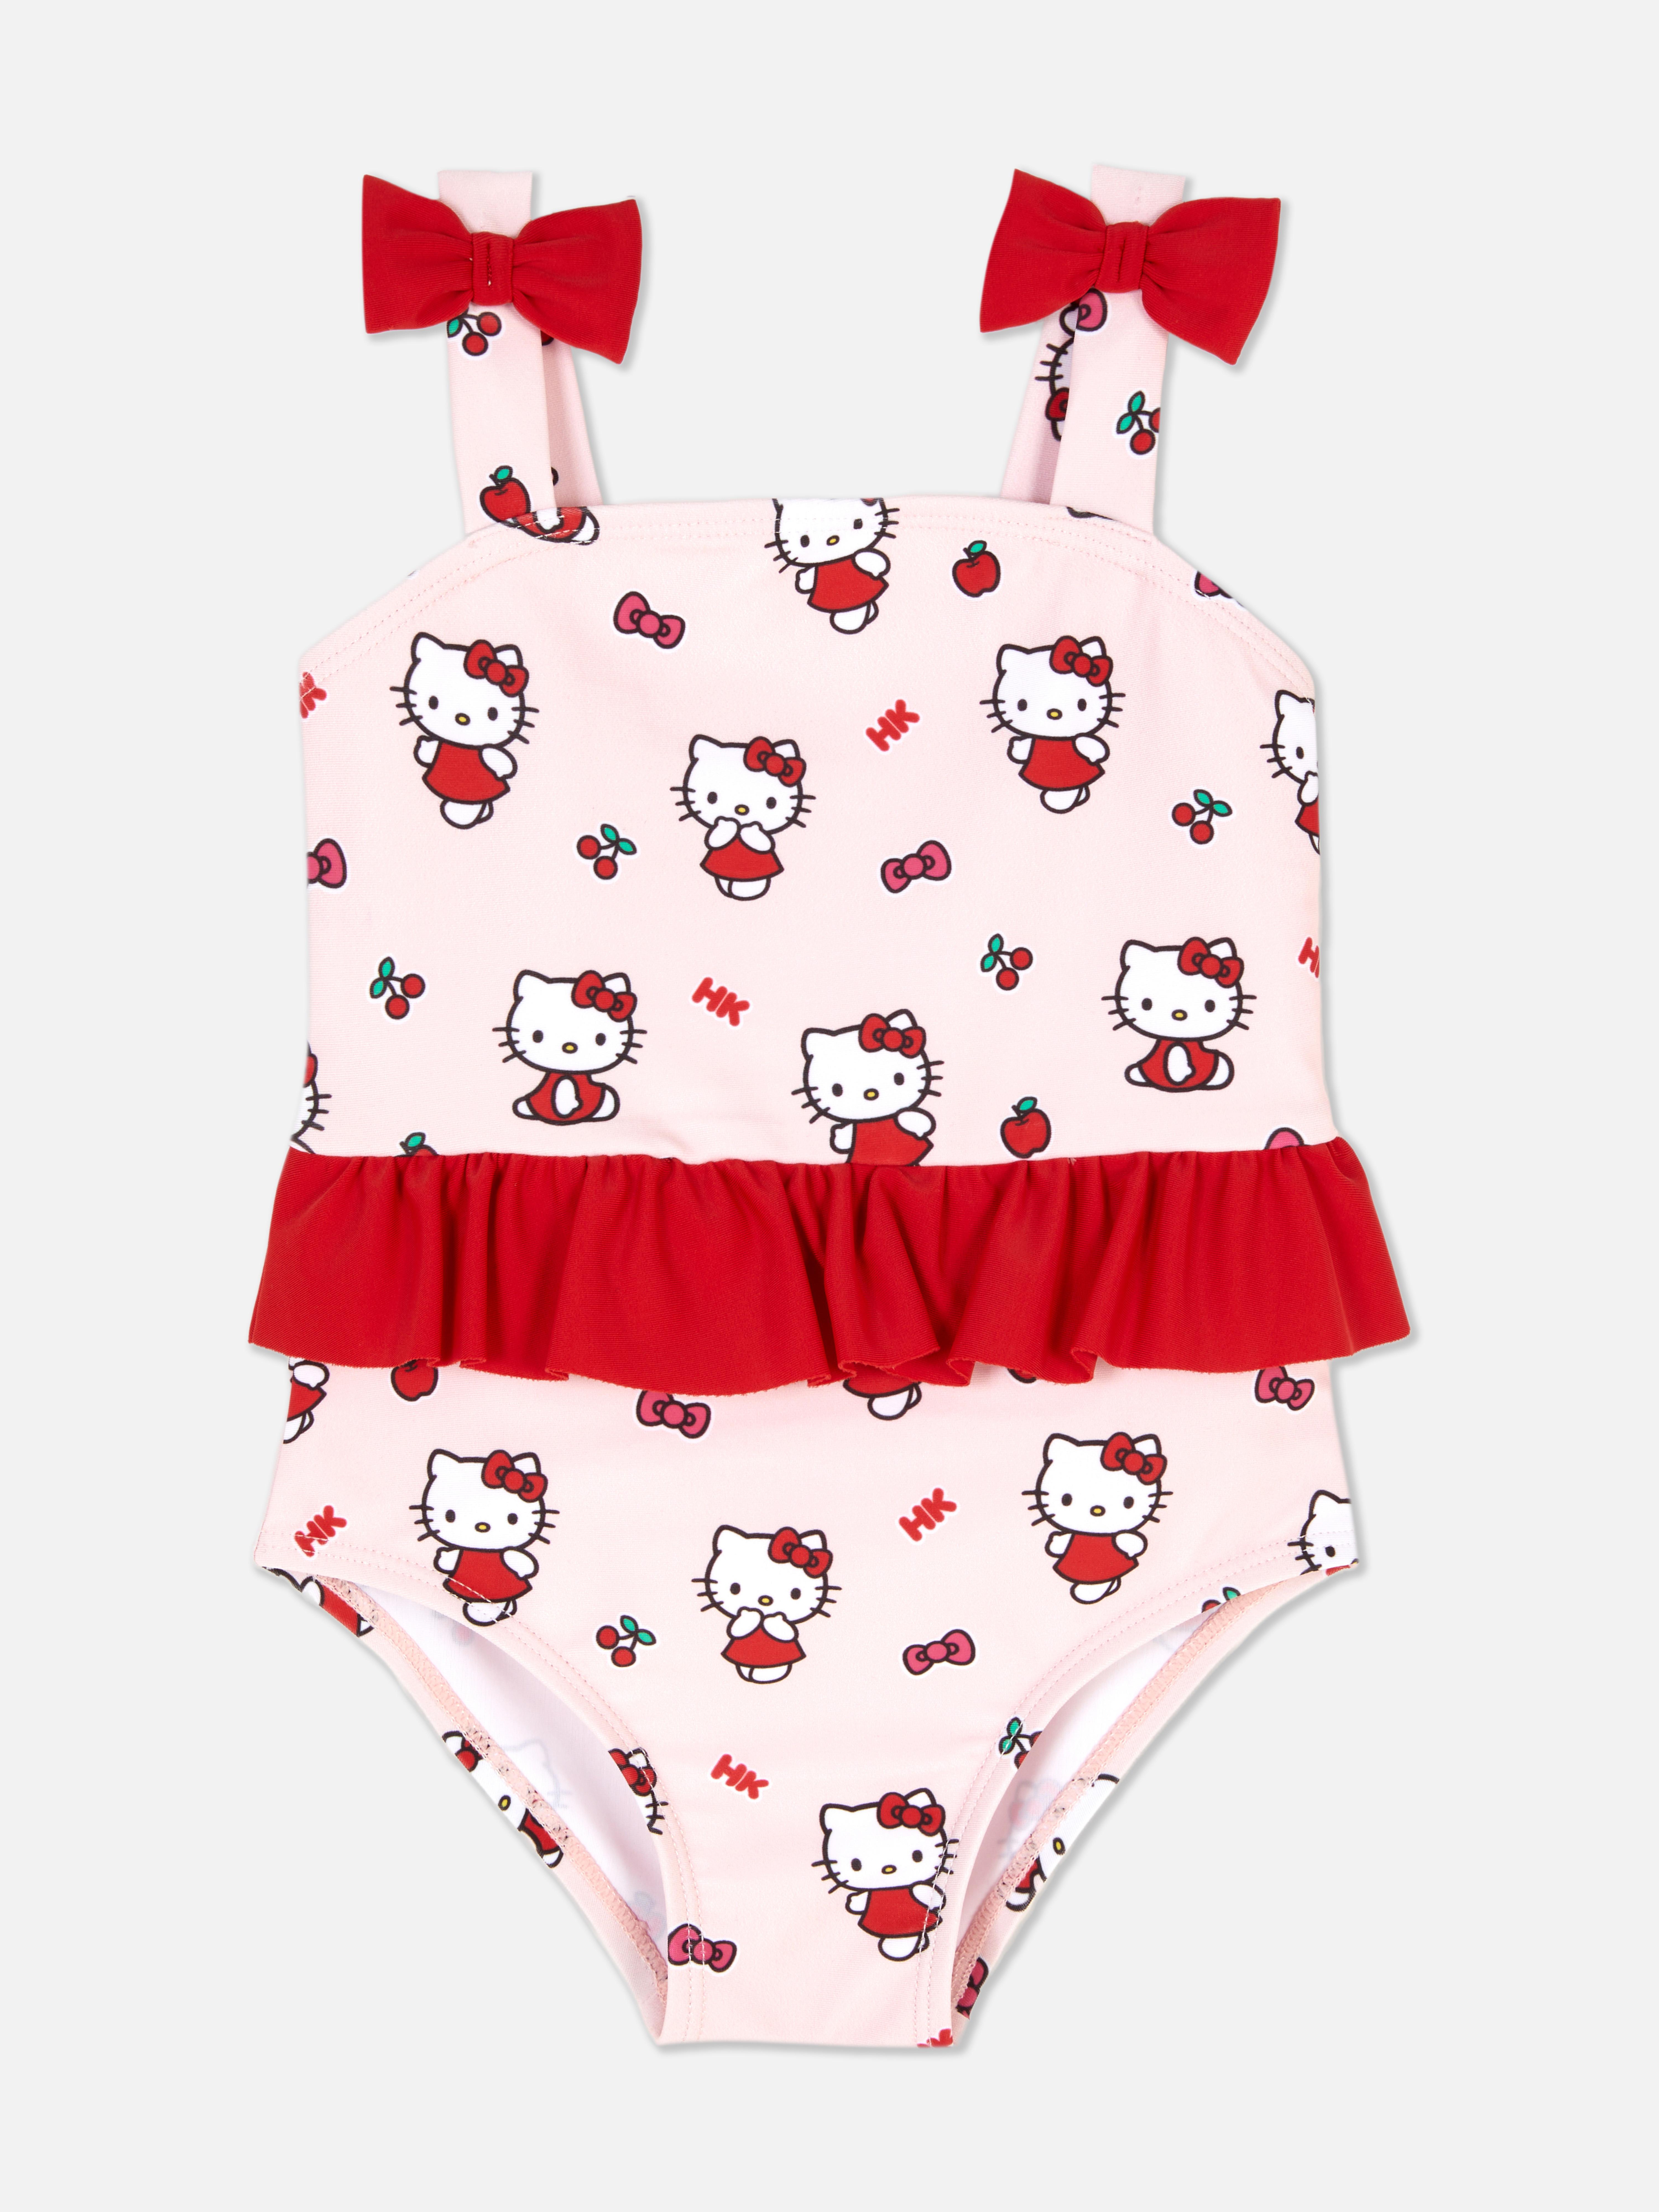 „Hello Kitty“ Badeanzug zum 50. Jubiläum